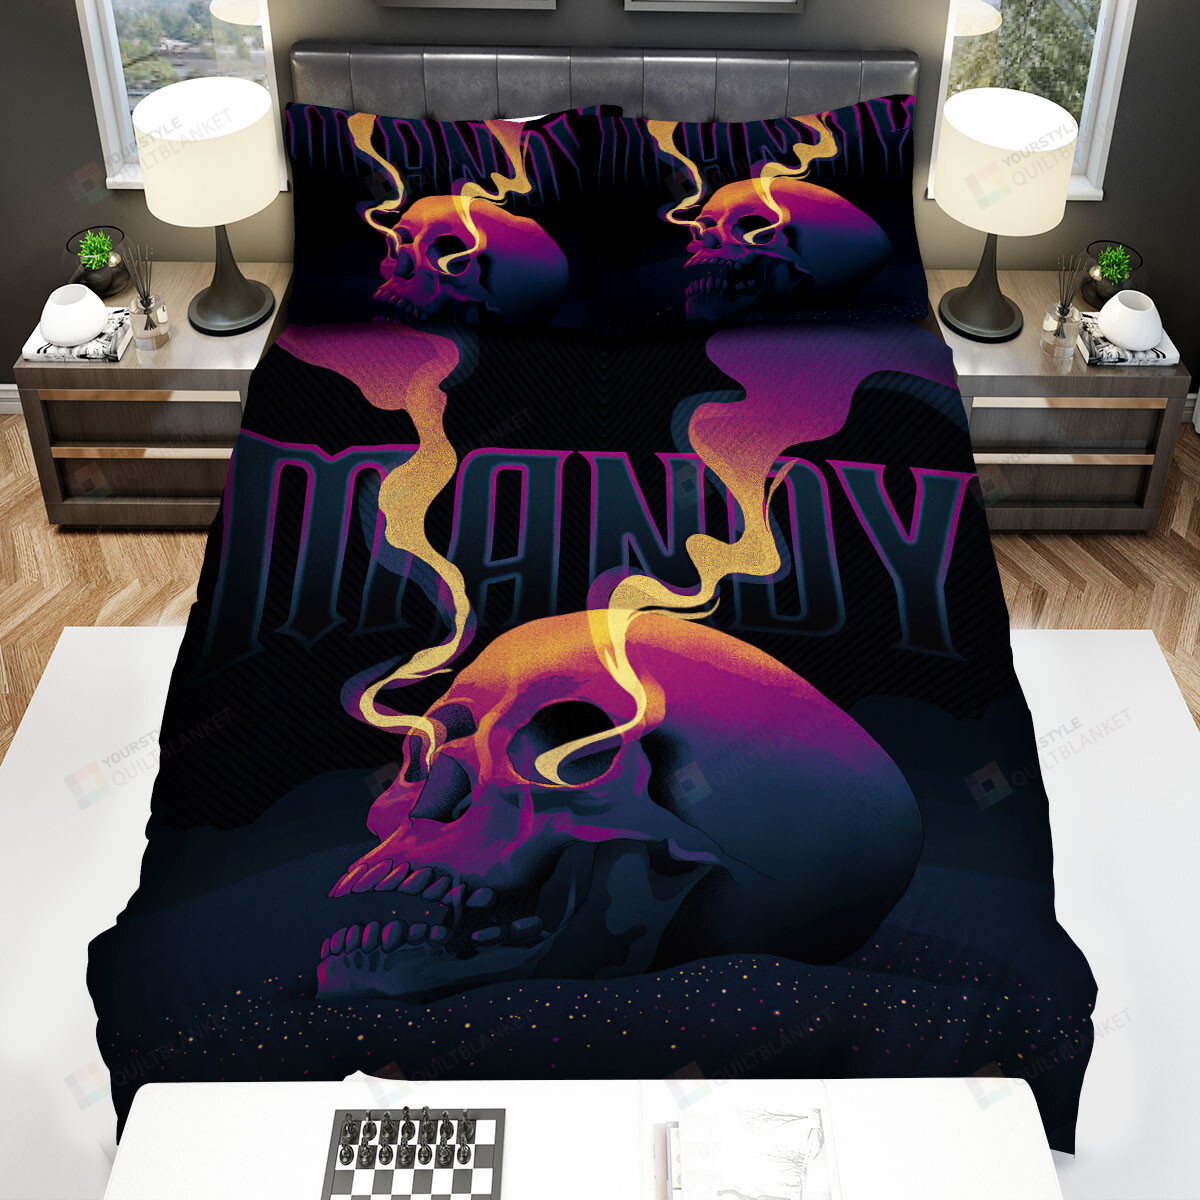 Mandy (I) Movie Art Bed Sheets Spread Comforter Duvet Cover Bedding Sets Ver 1